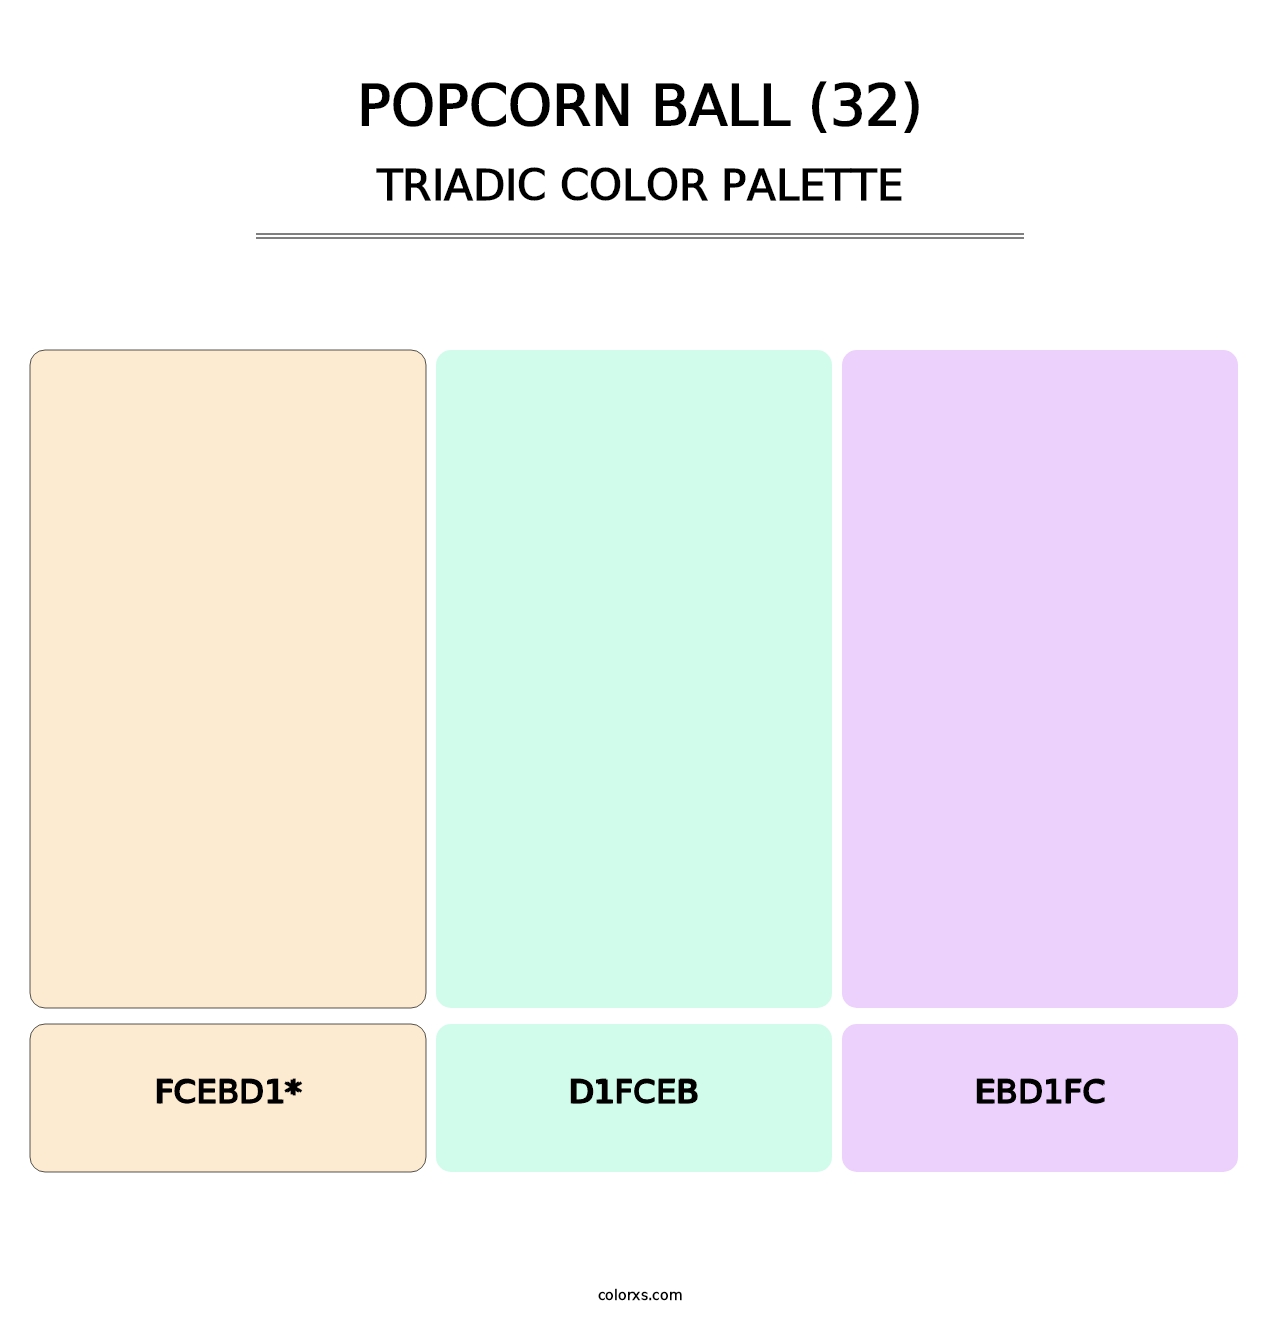 Popcorn Ball (32) - Triadic Color Palette